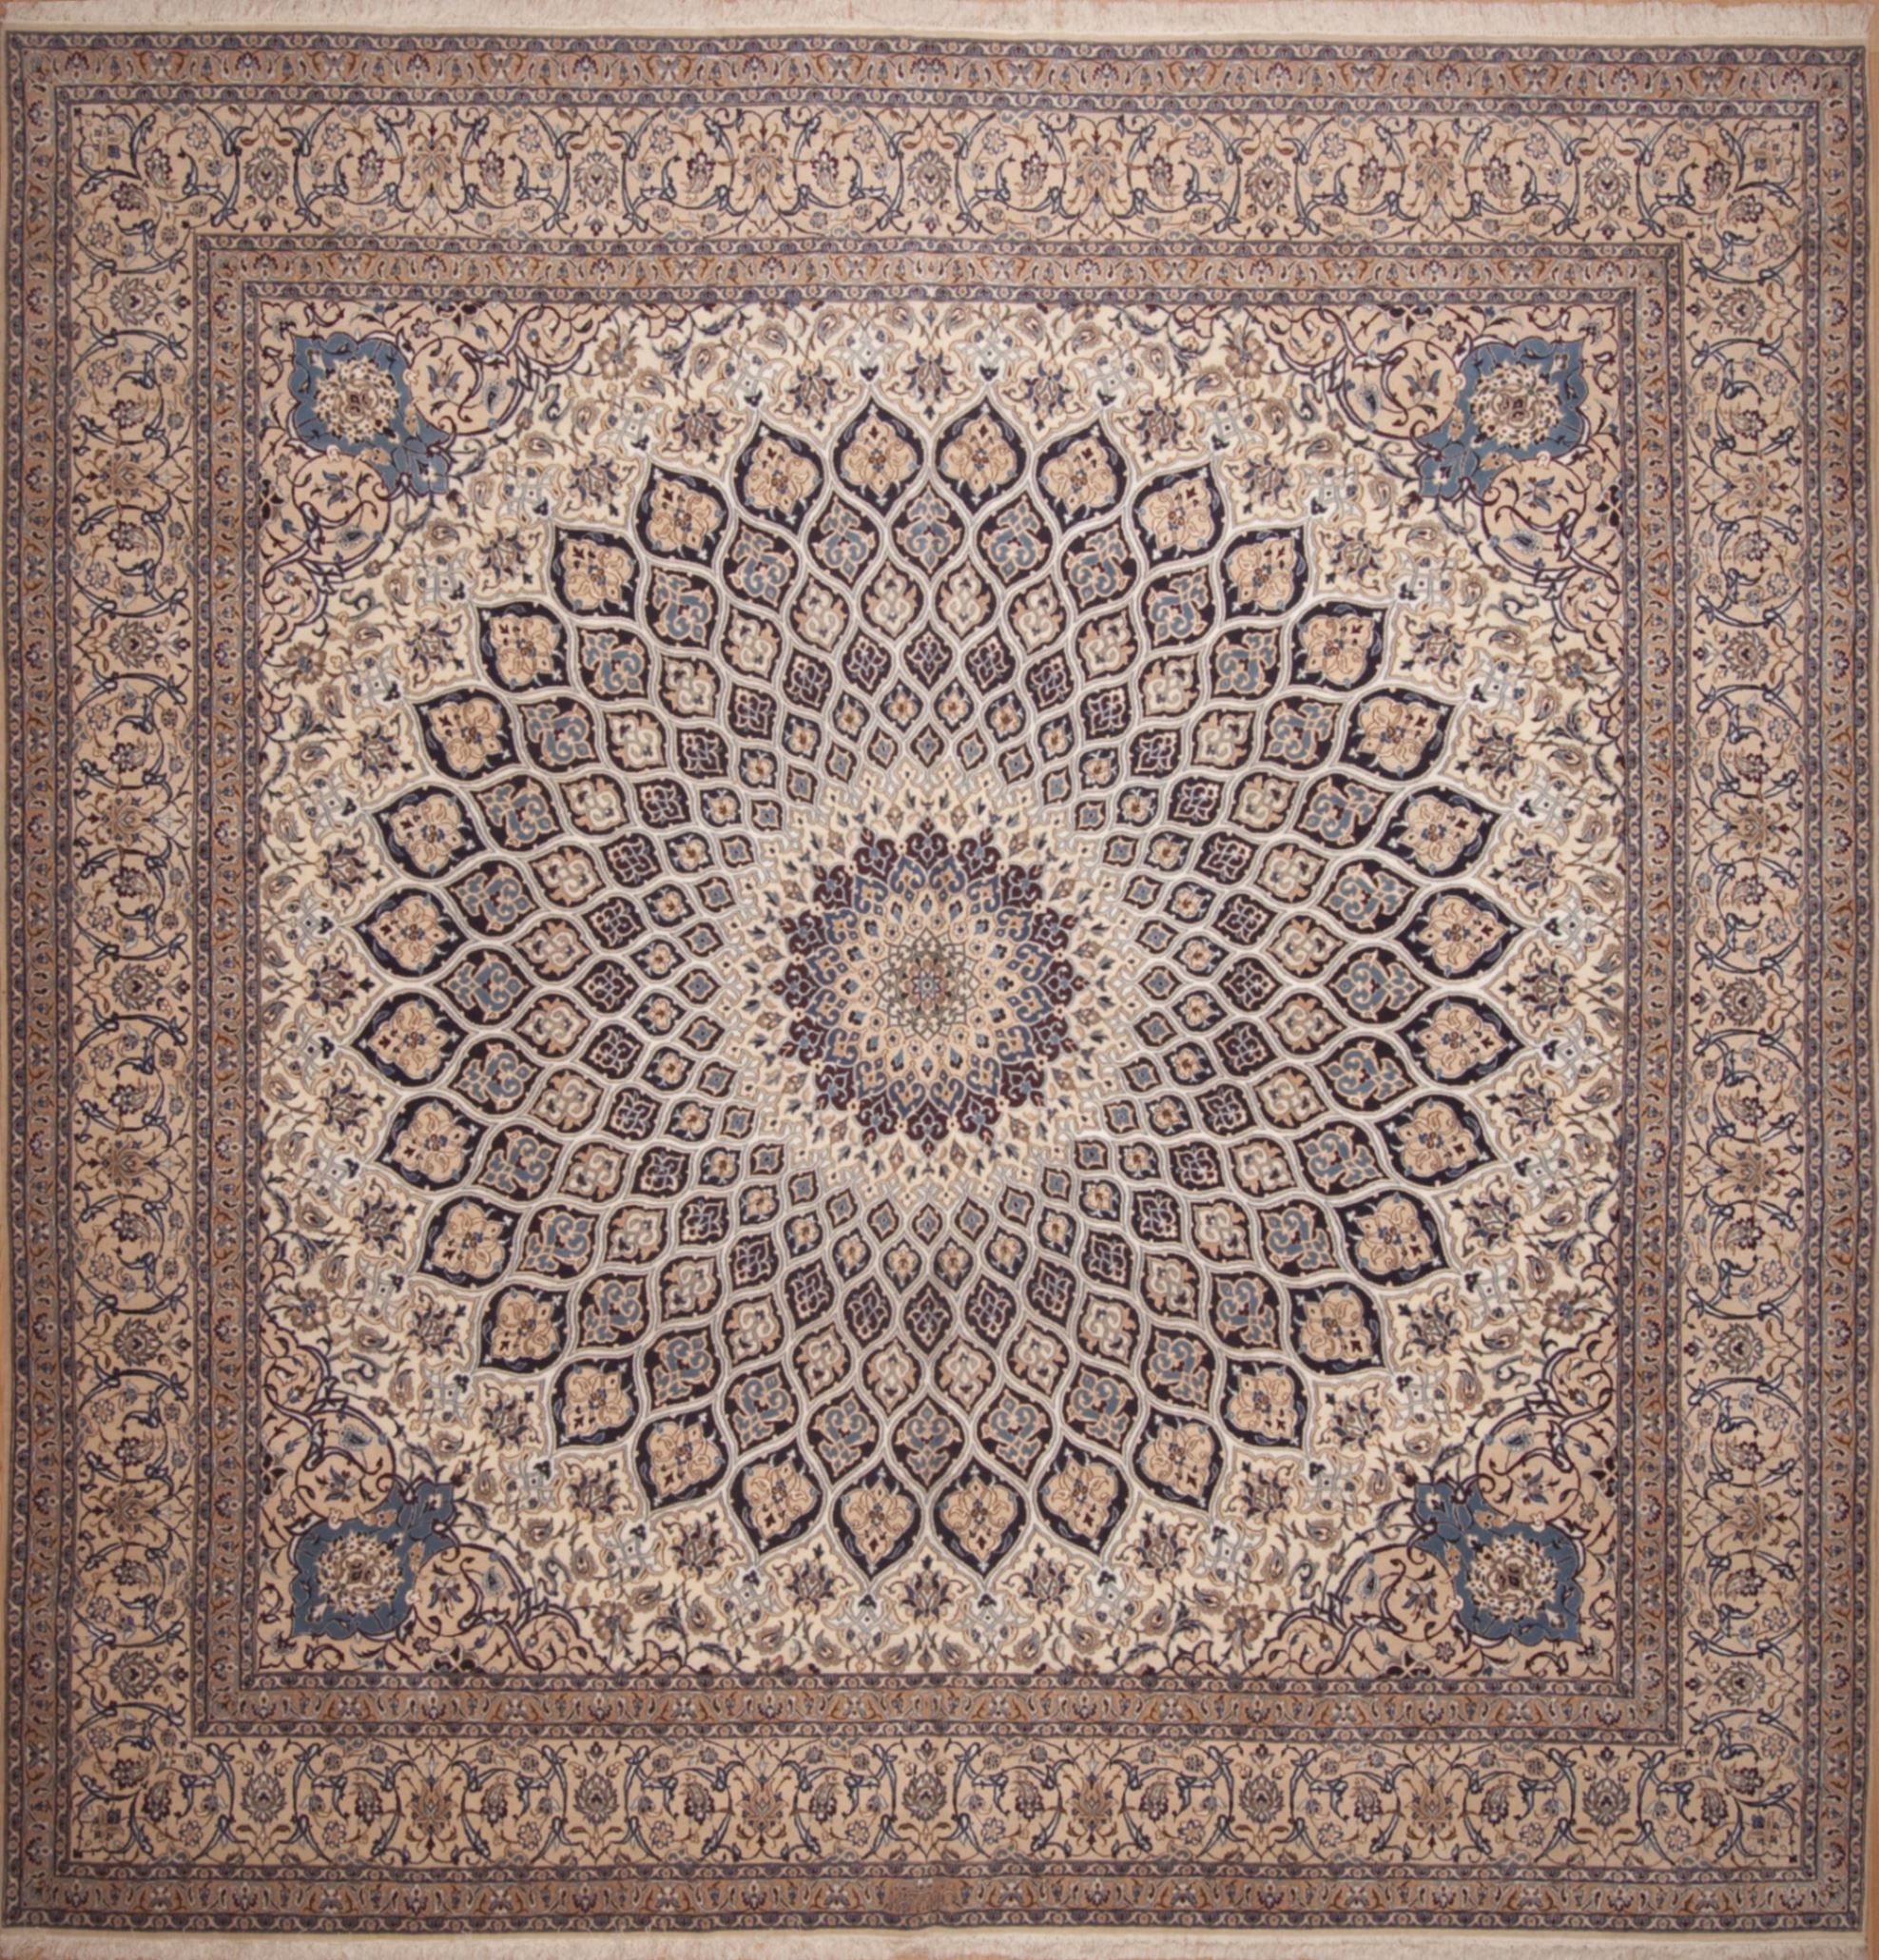 Persian Nain White Square 9 Ft And Larger Wool Carpet 11287 | Sku 11287 Regarding Square Rugs (View 9 of 15)